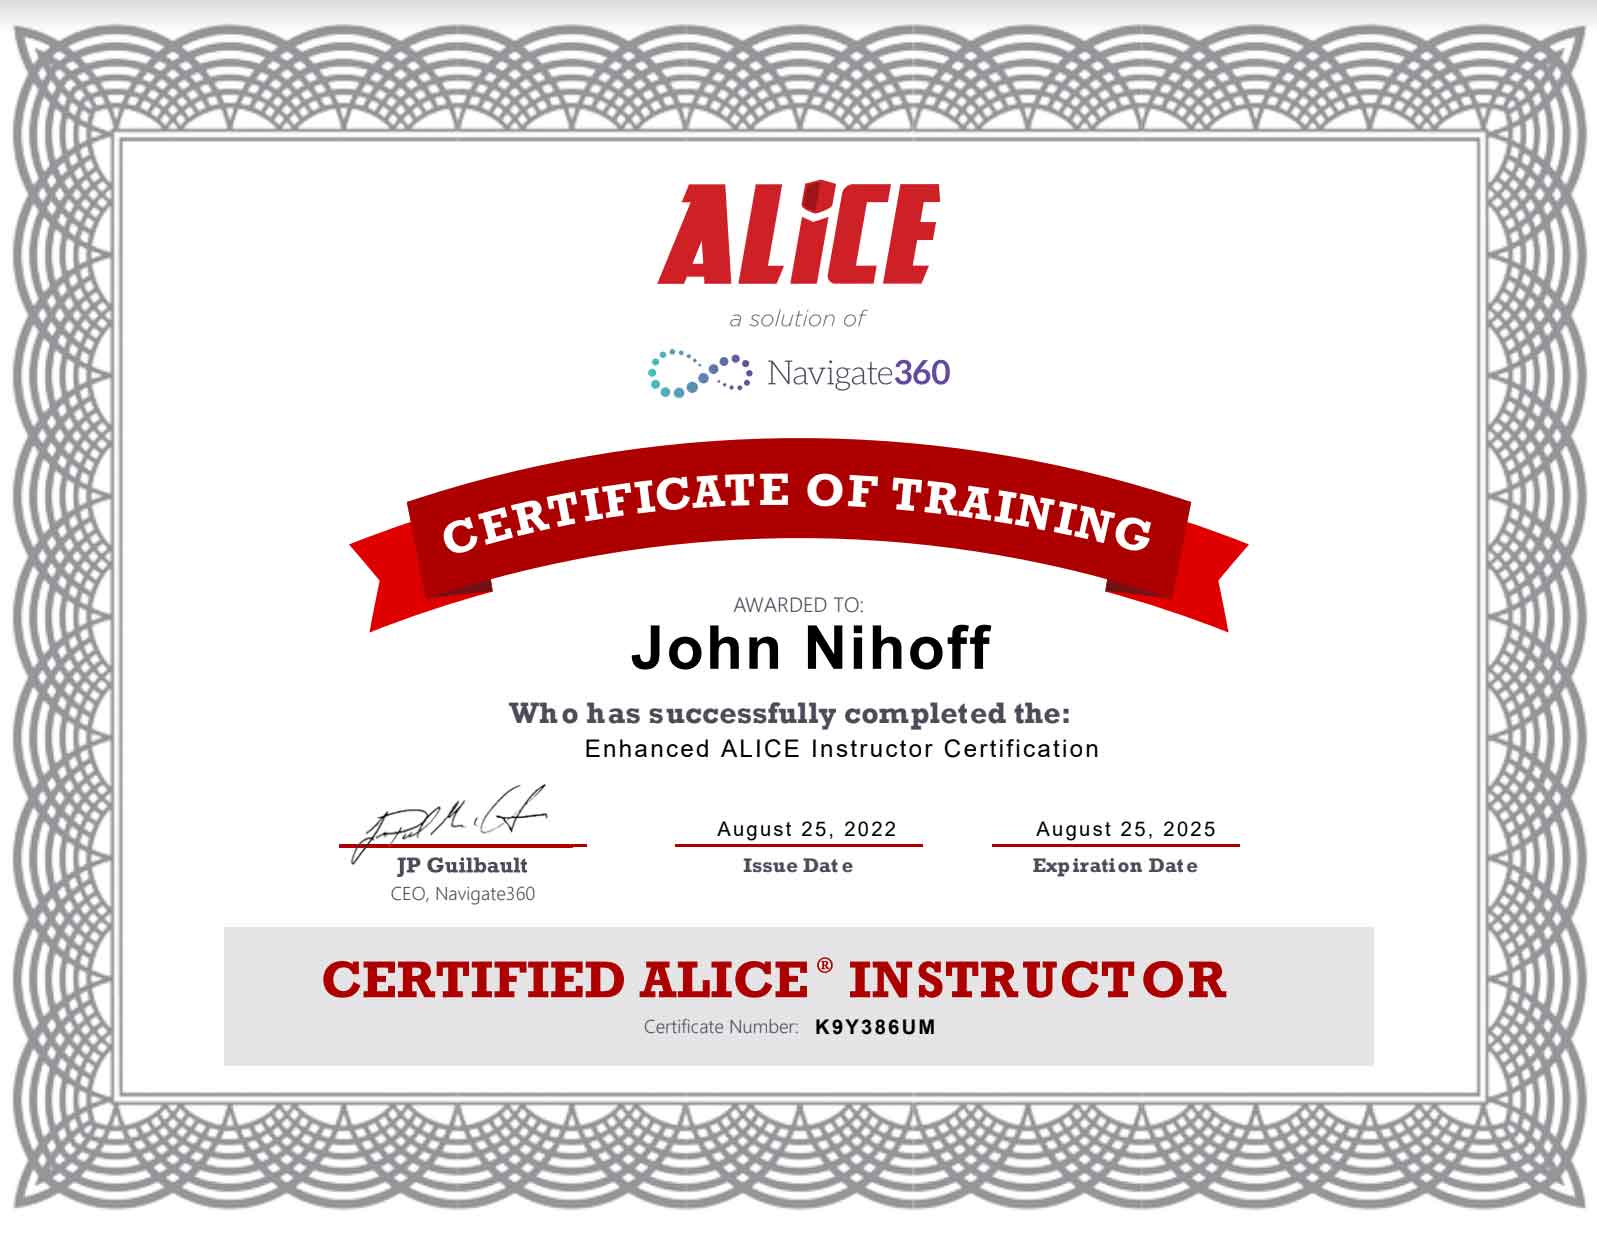 ALICE Certified